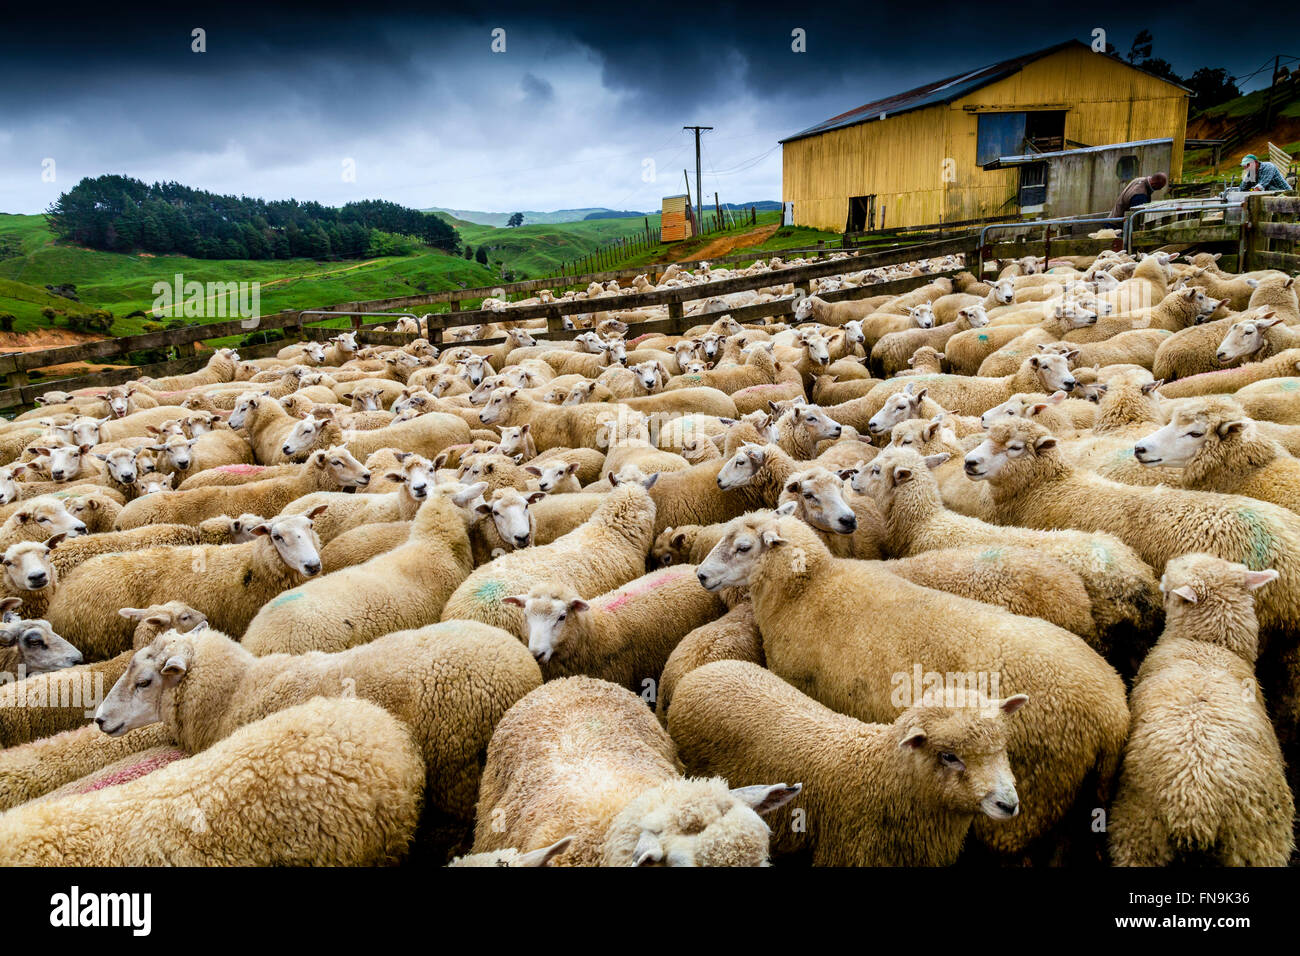 Sheep In A Pen Waiting To Be Sheared, Sheep Farm, Pukekohe, New Zealand Stock Photo